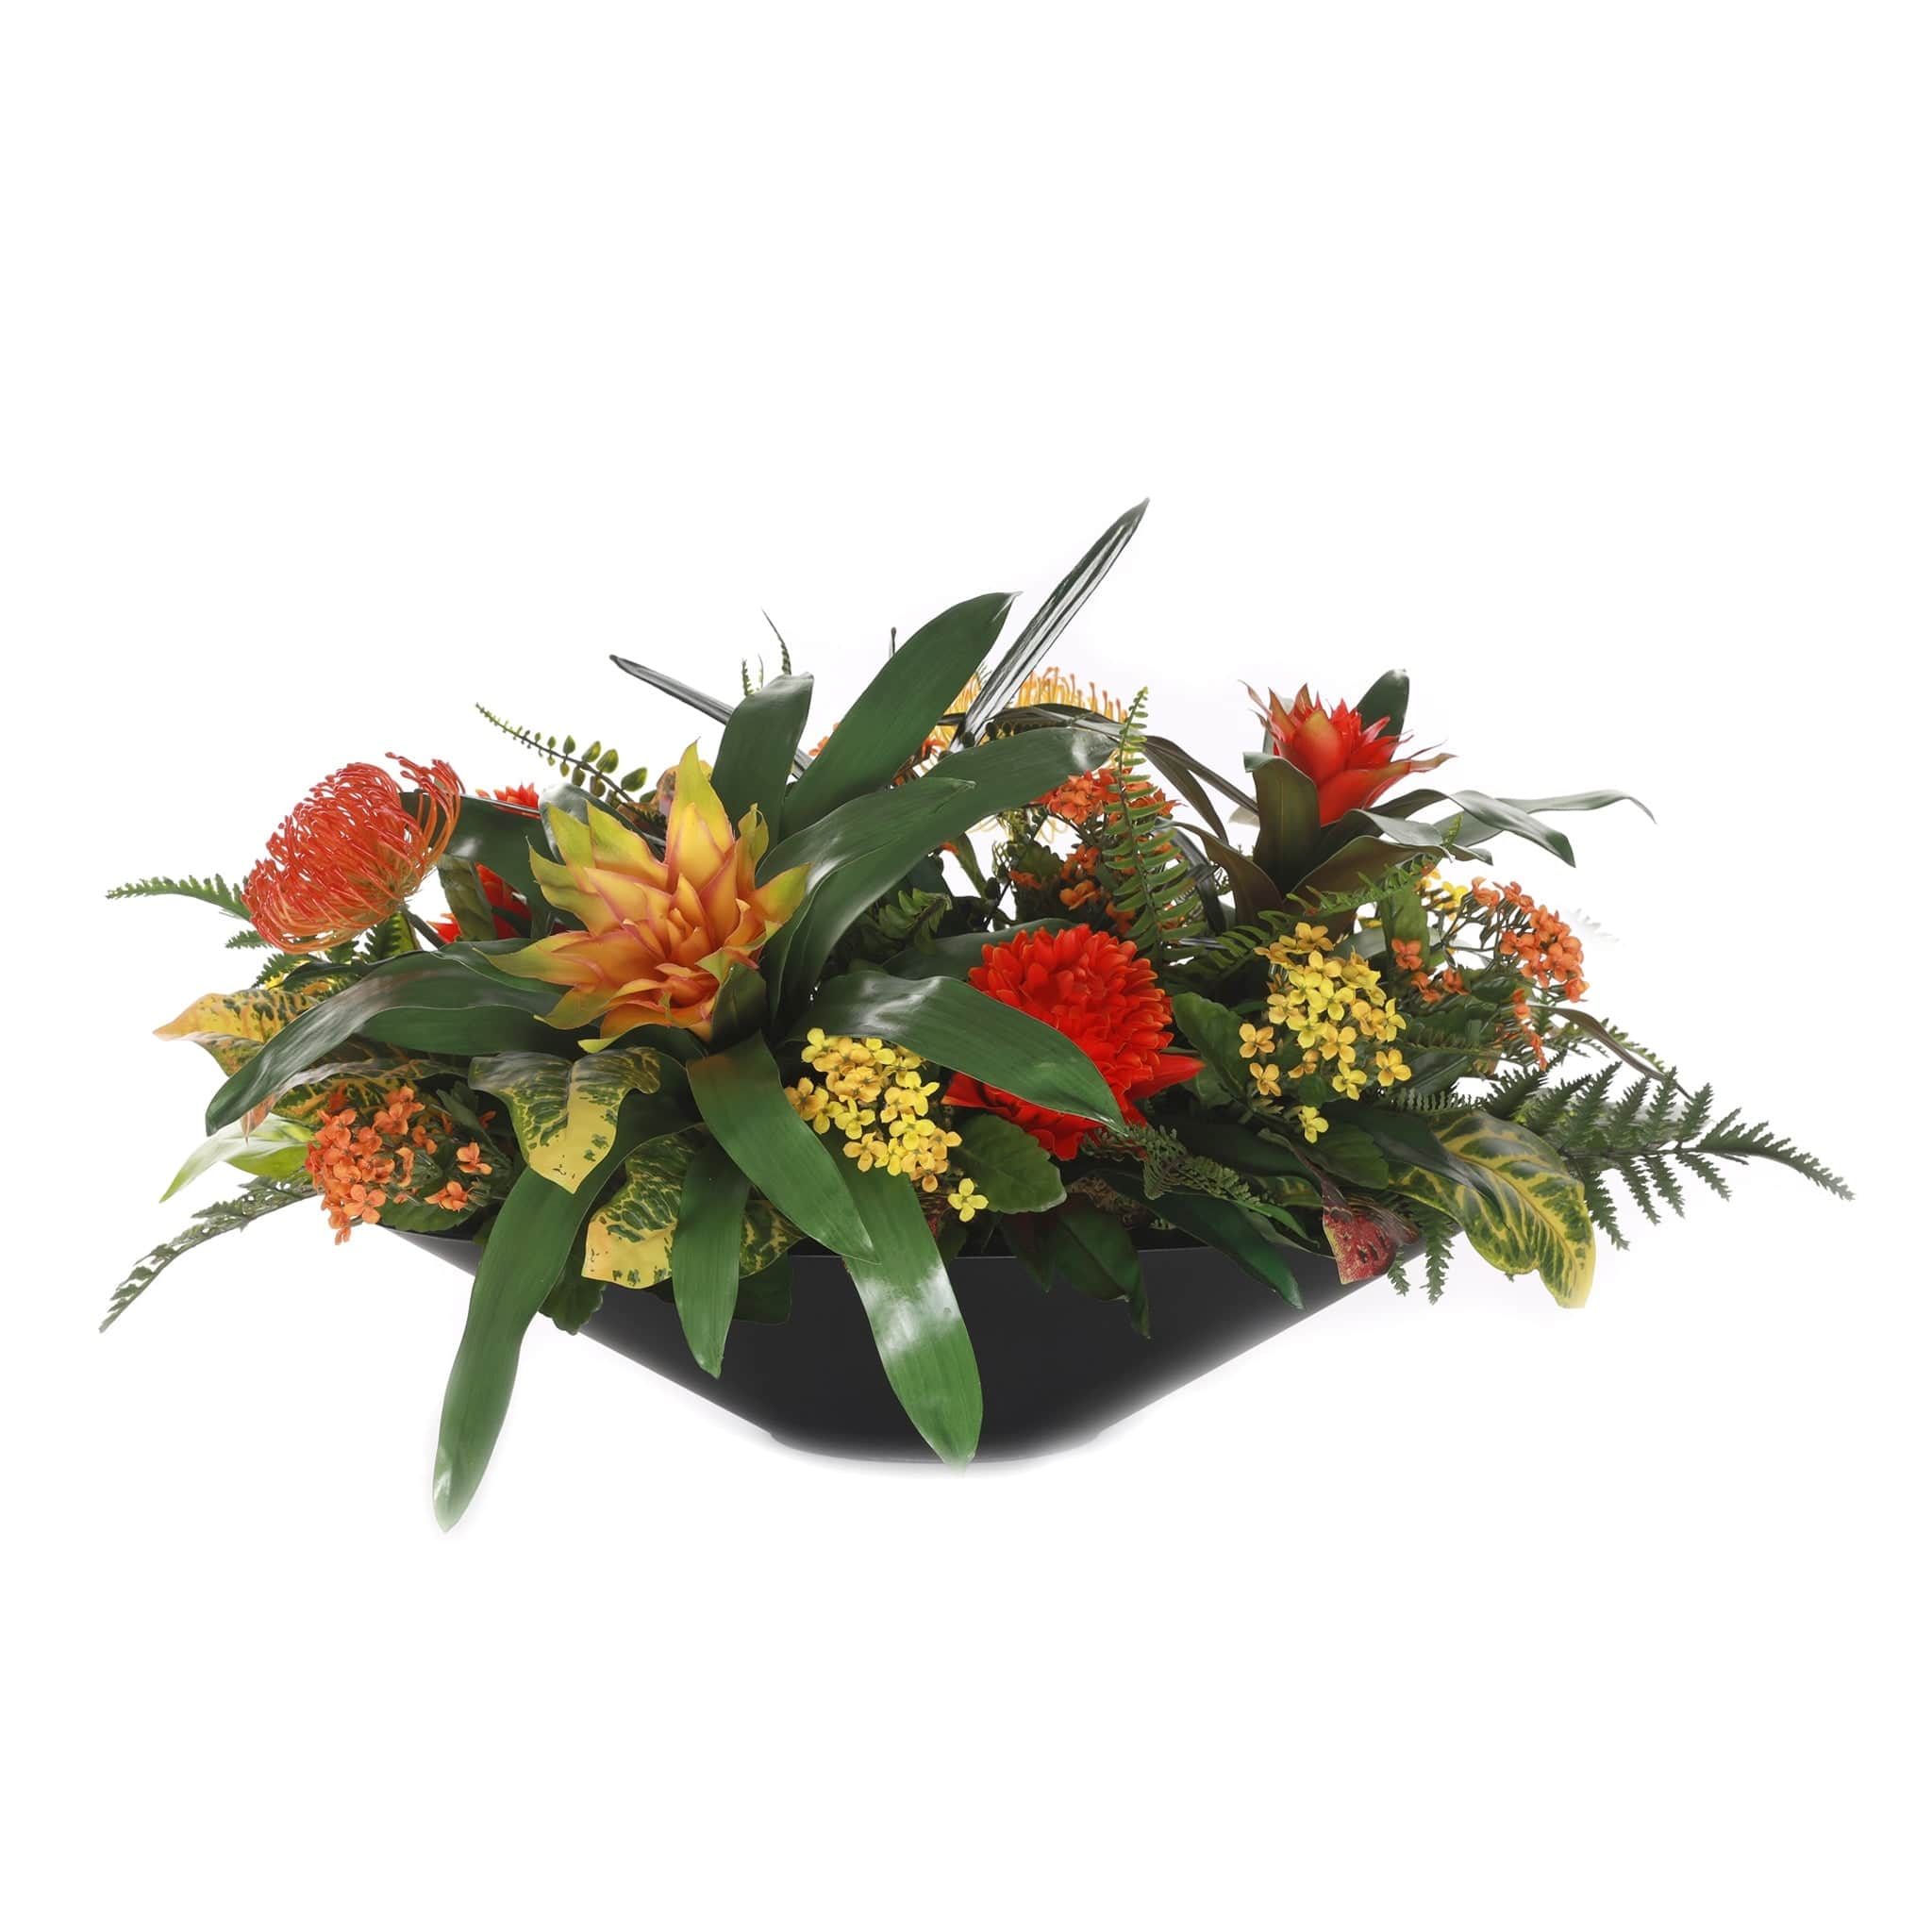 Bromeliad Tropical Flowers Arrangement In Oval Zinc Pot - Red,Yellow ...